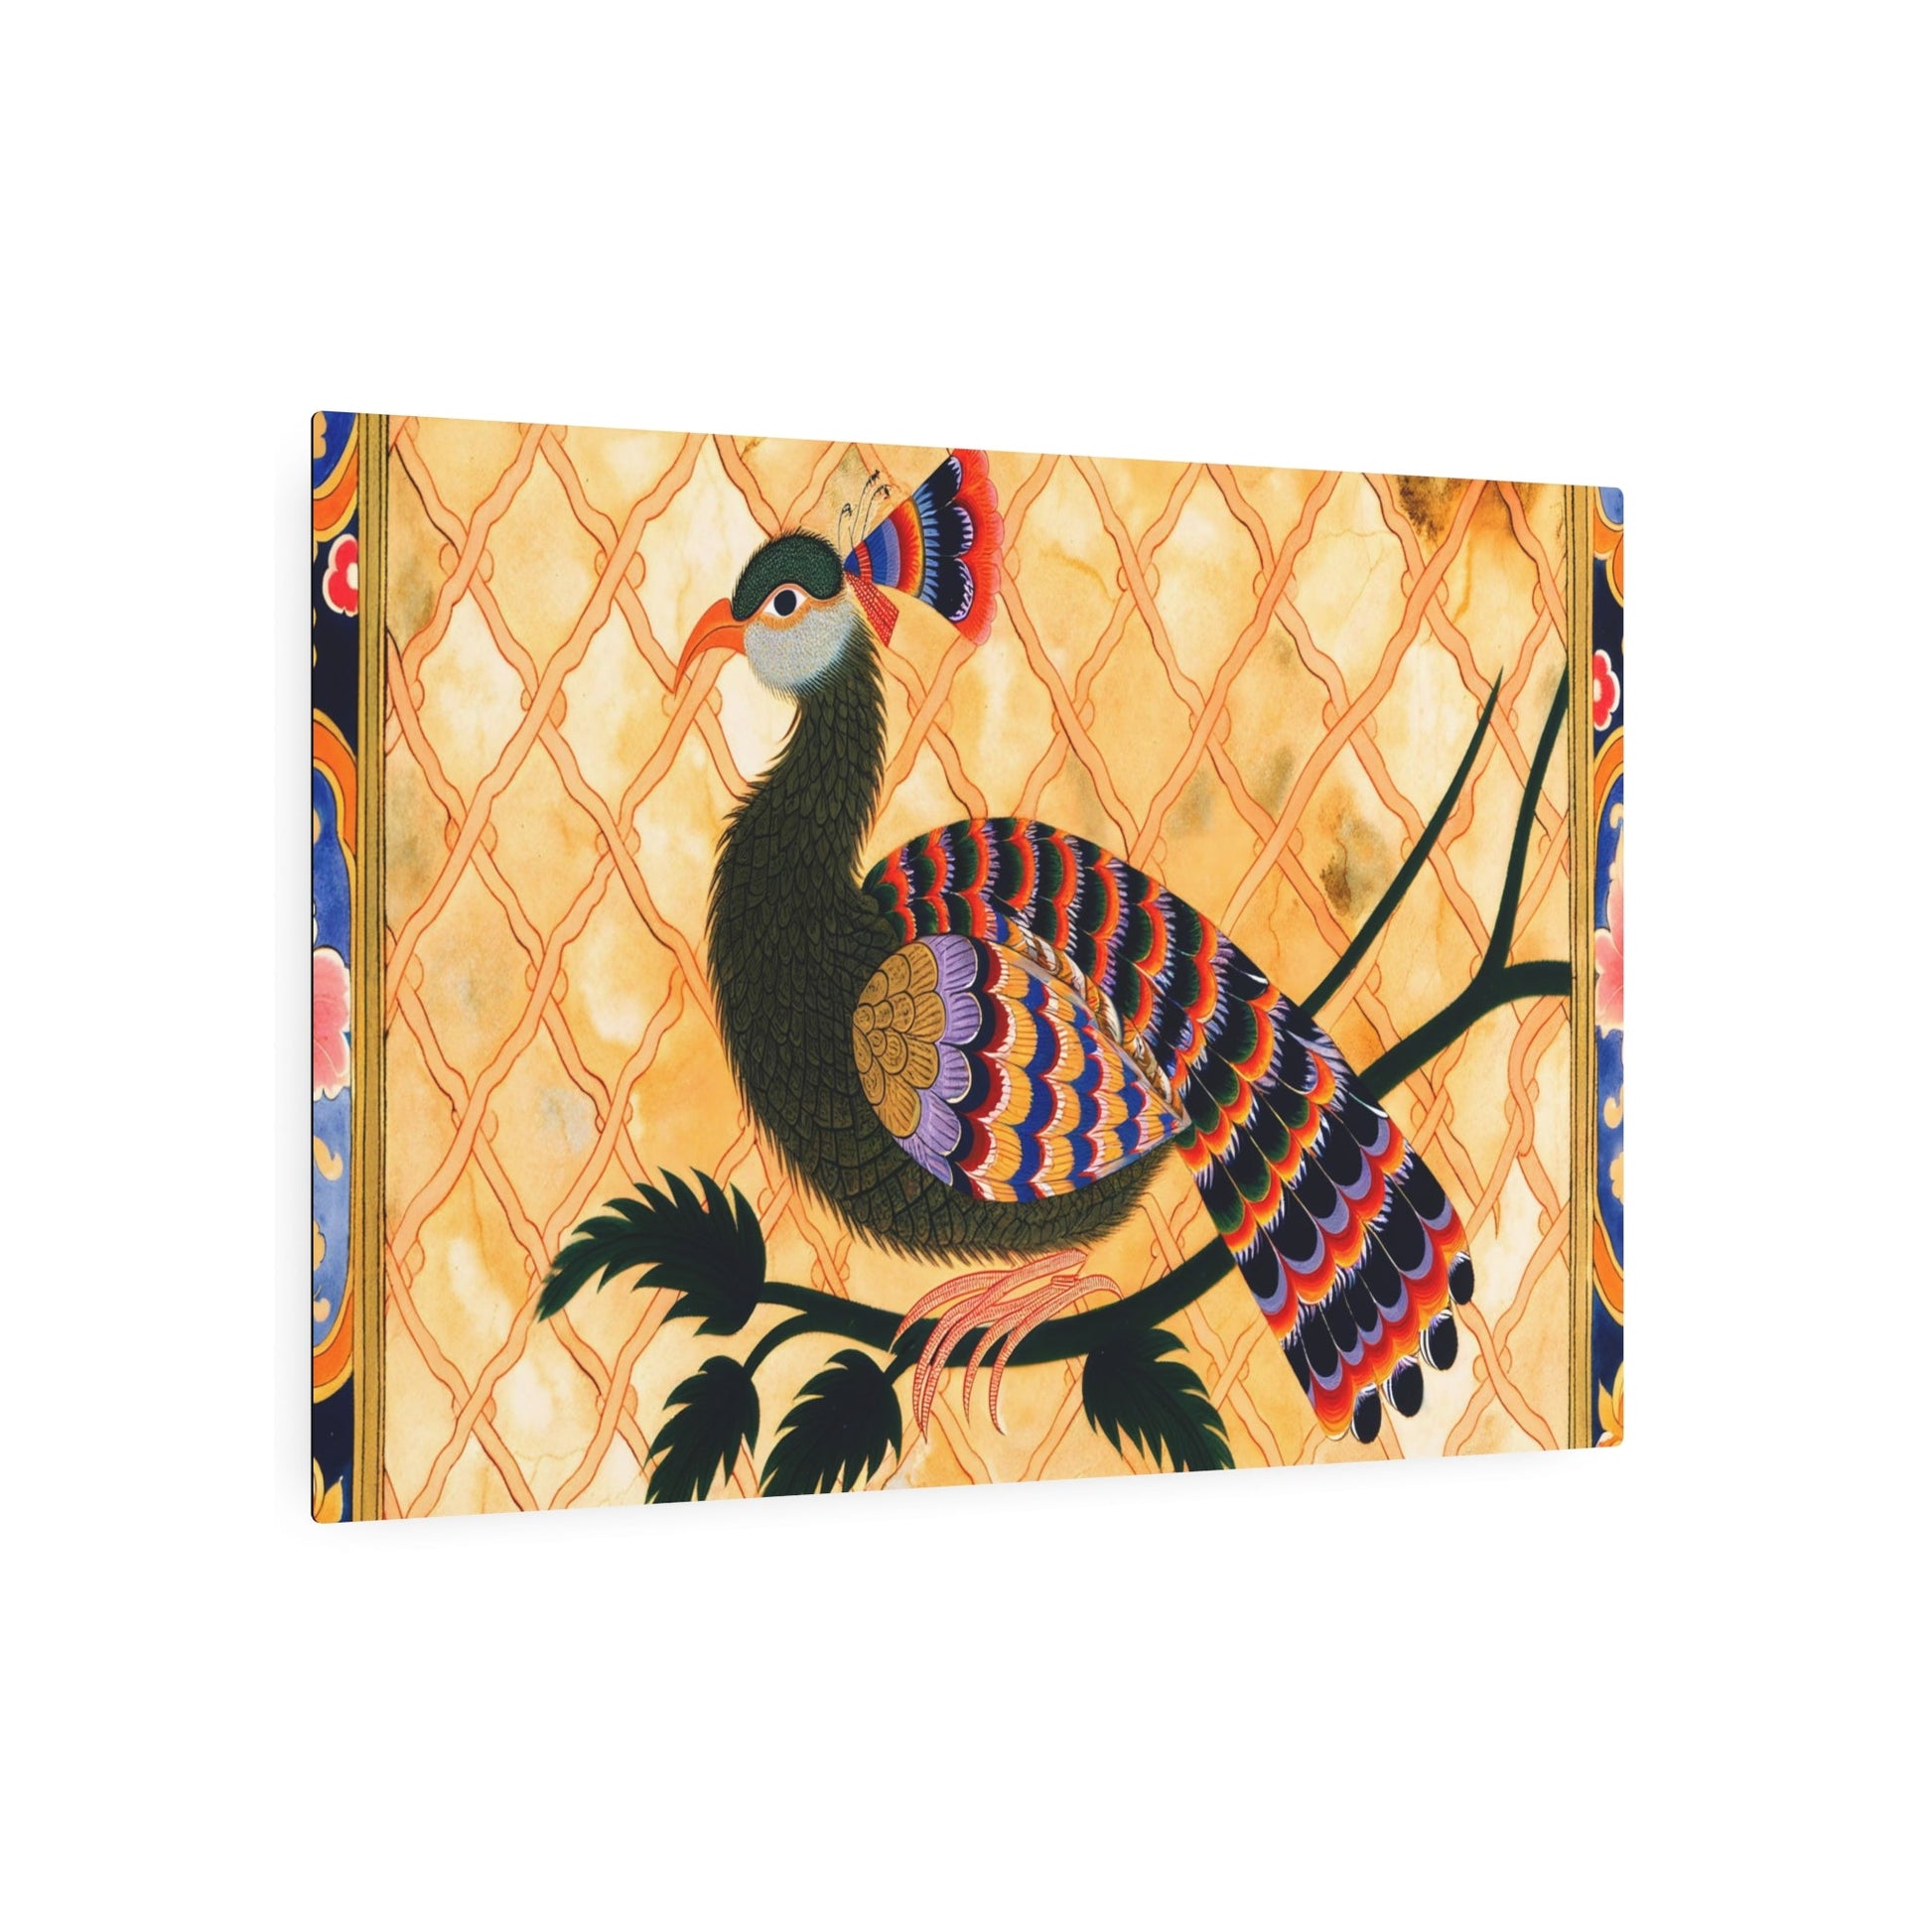 Metal Poster Art | "Mughal Miniature South Asian Artwork - Traditionally Rich, Intricate Bird Design in Vivid Mughal Colors - Non-Western & - Metal Poster Art 36″ x 24″ (Horizontal) 0.12''